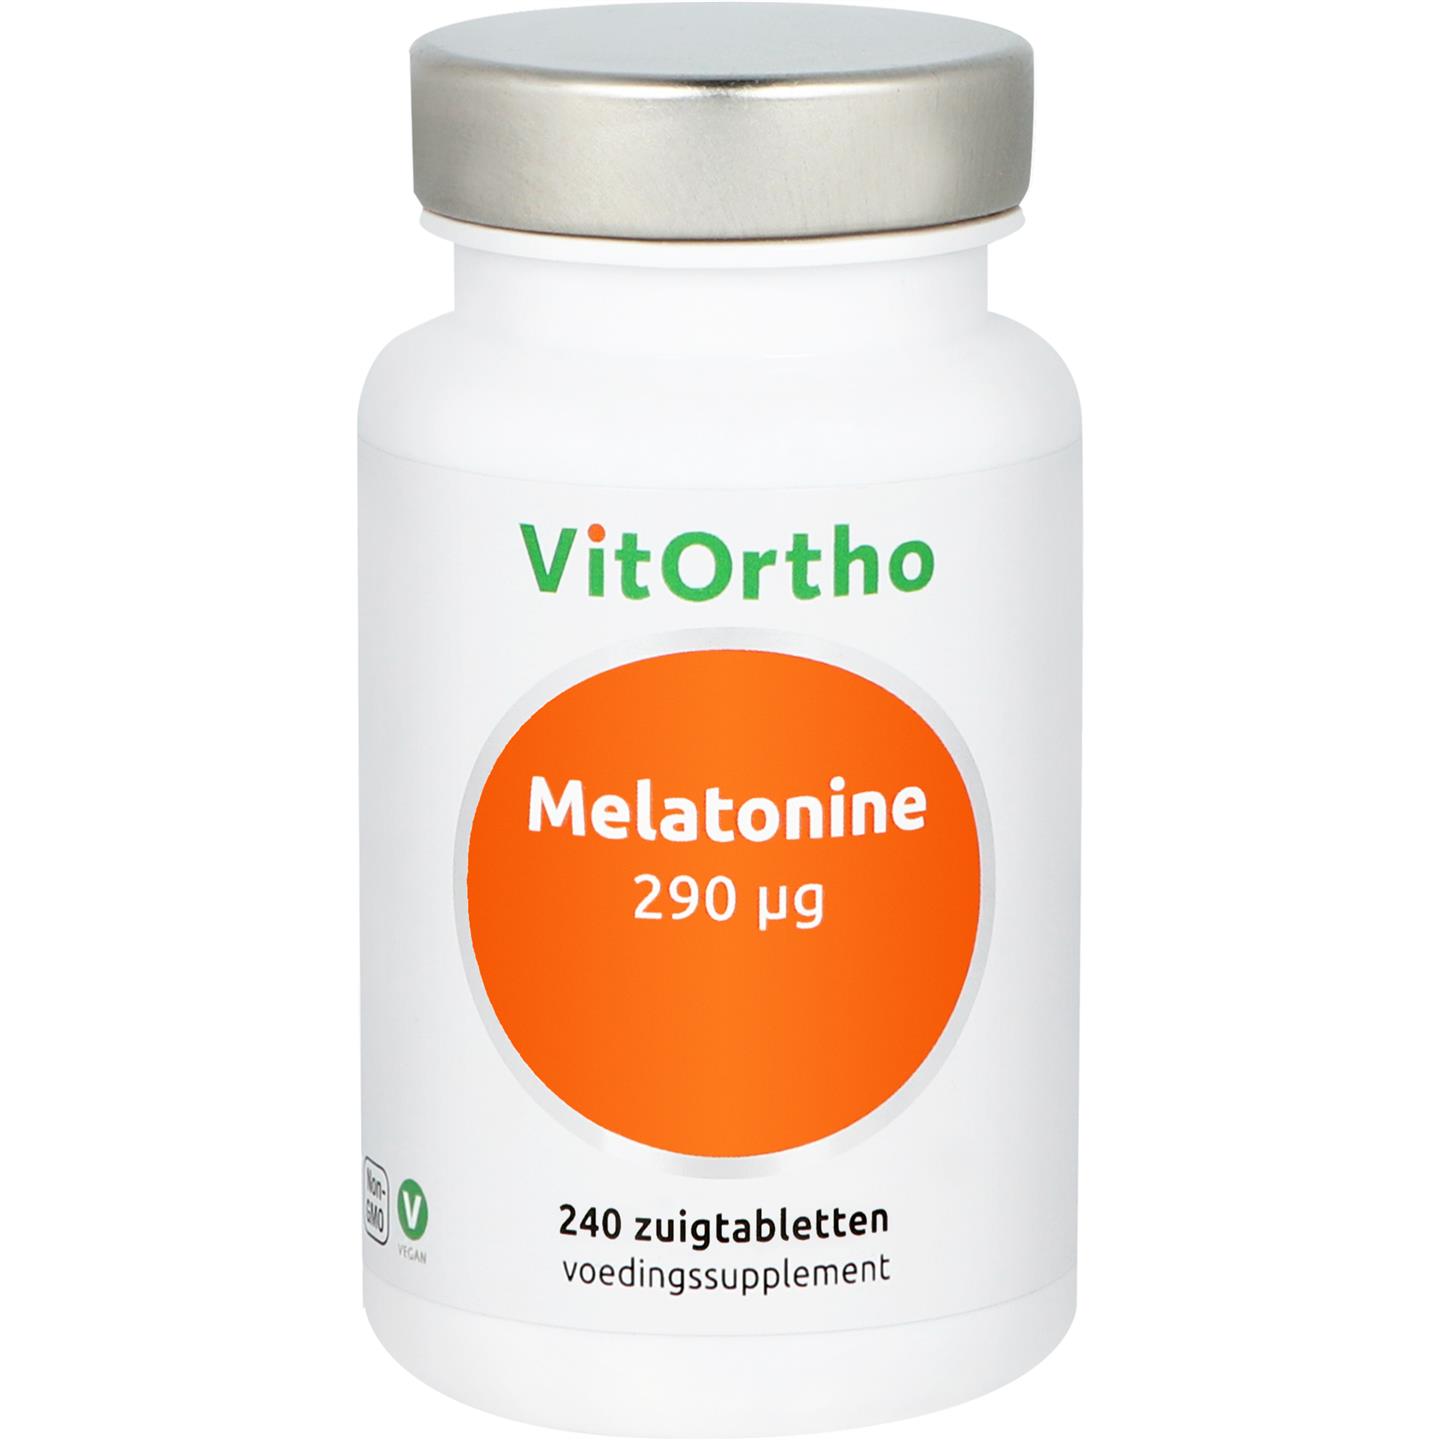 Vitortho melatonine 290 mcg(240 zuigtab)